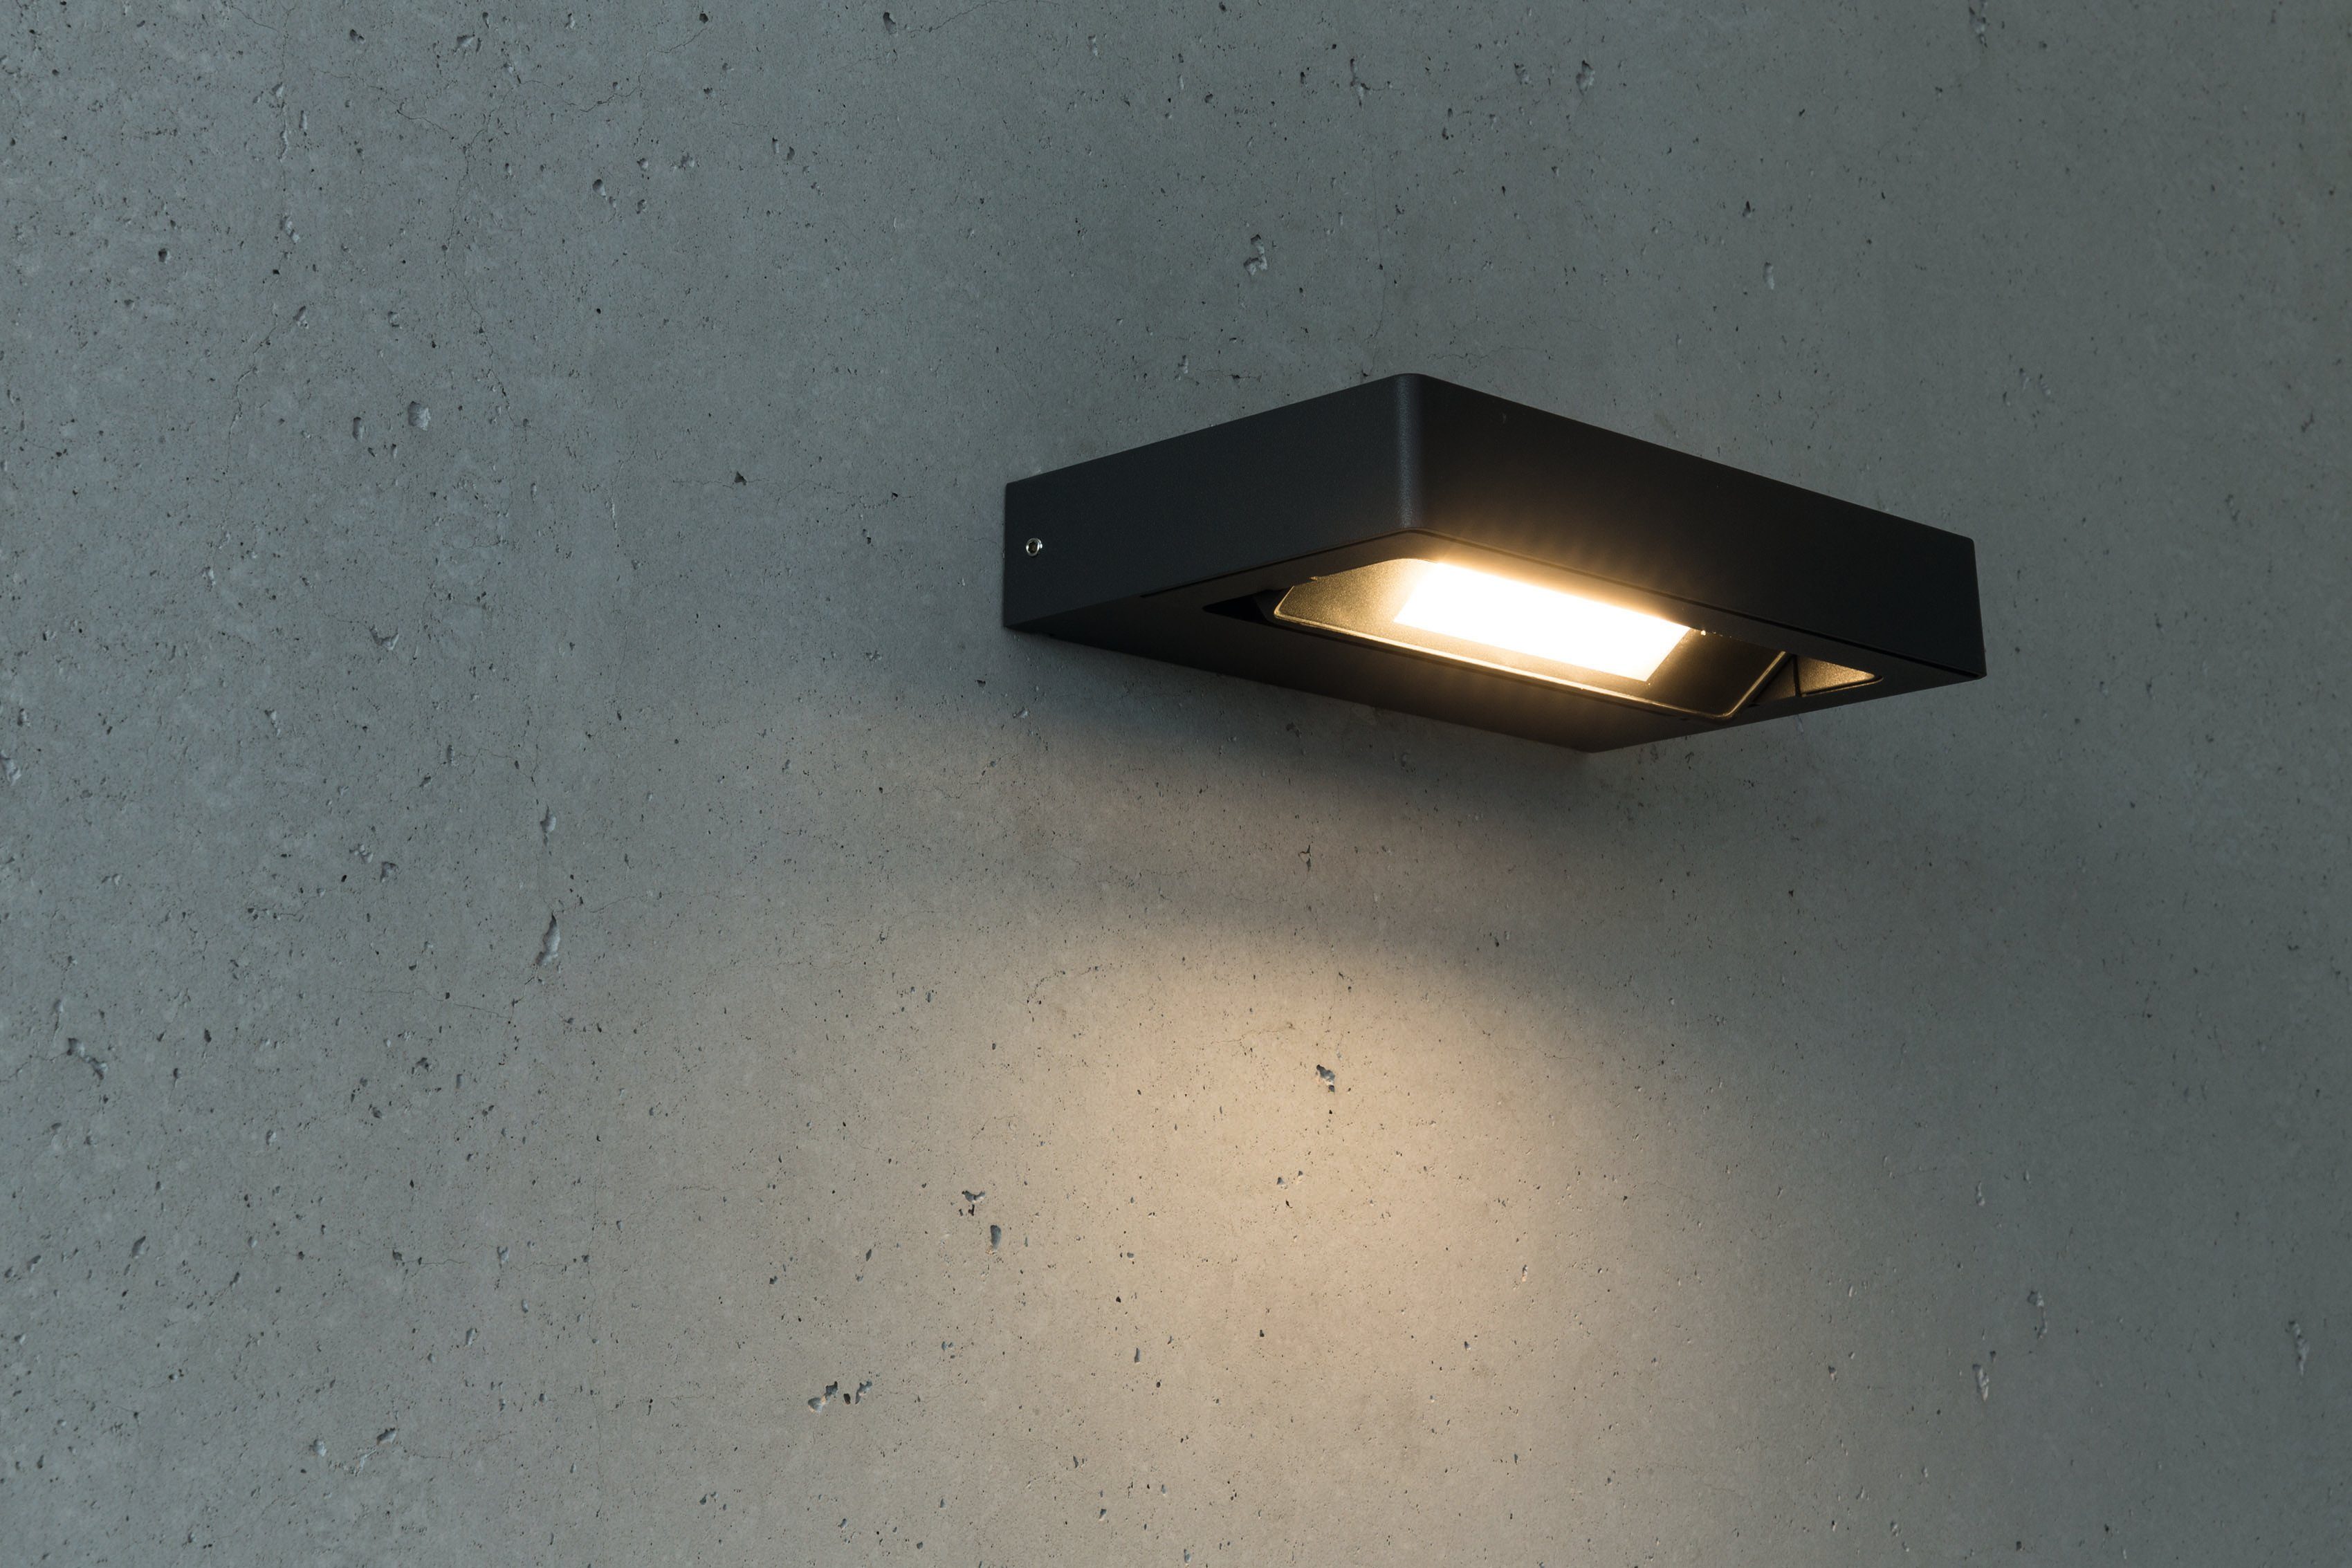 Wandlampe, 320° HEITRONIC integriert, Warmweiß, LED Leuchteinheit fest Außenlampe, Wandleuchte LED Cordoba, schwenkbar um